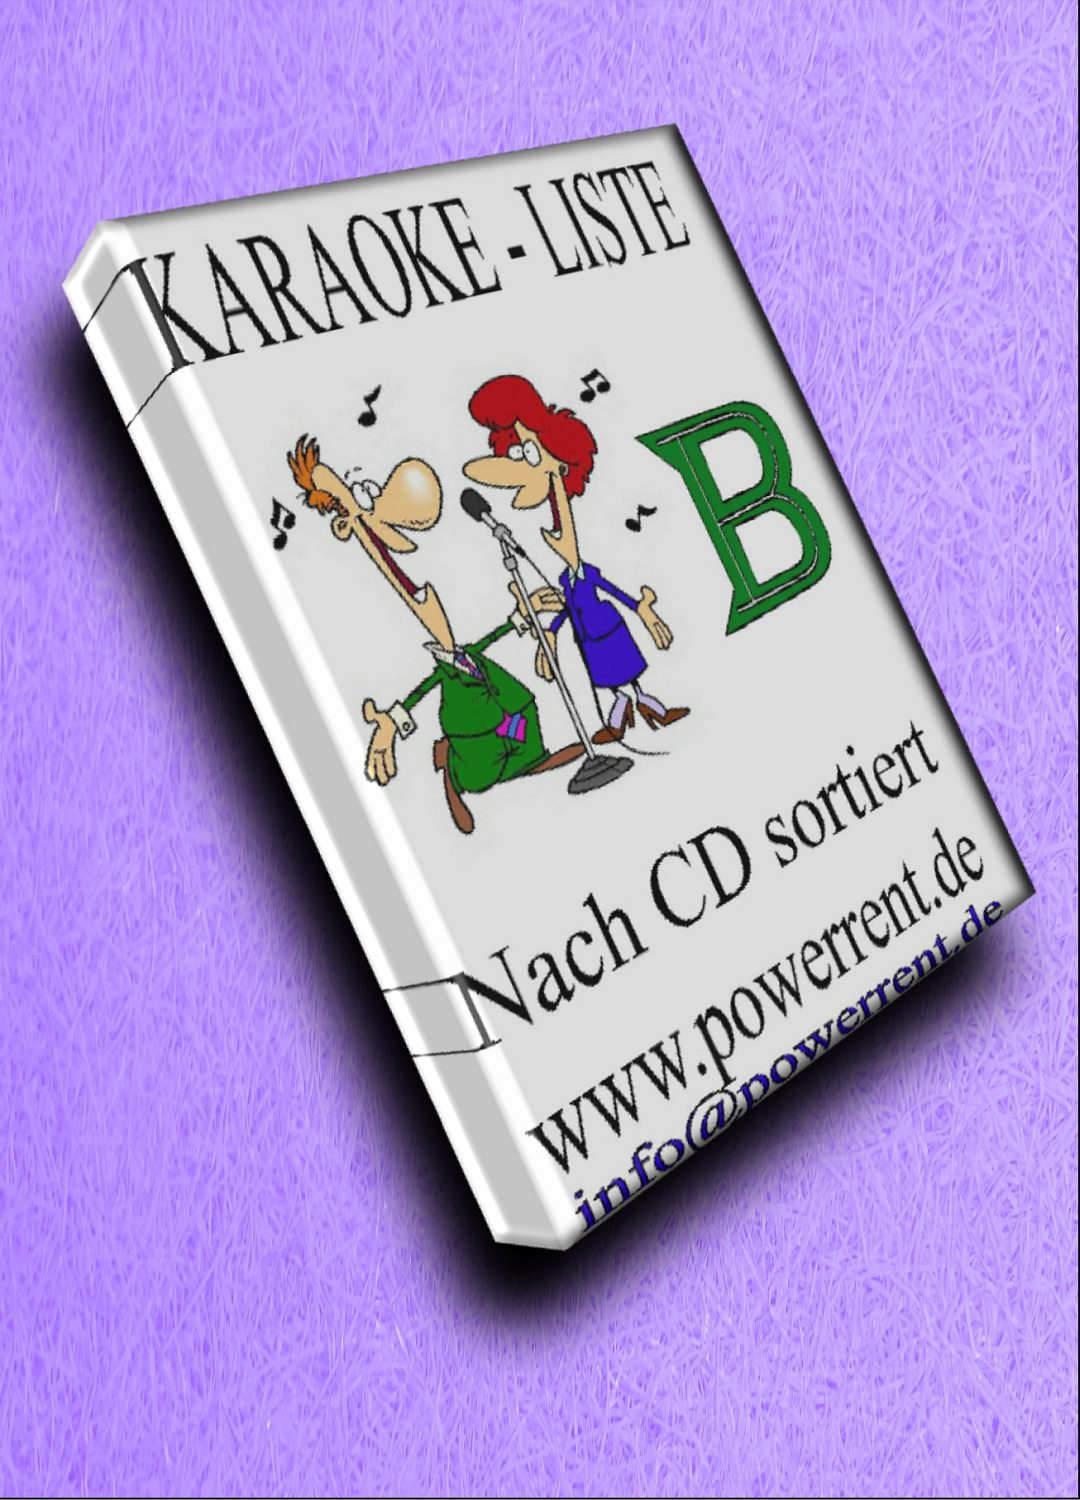 Karaoke Cover Liste nach CD B